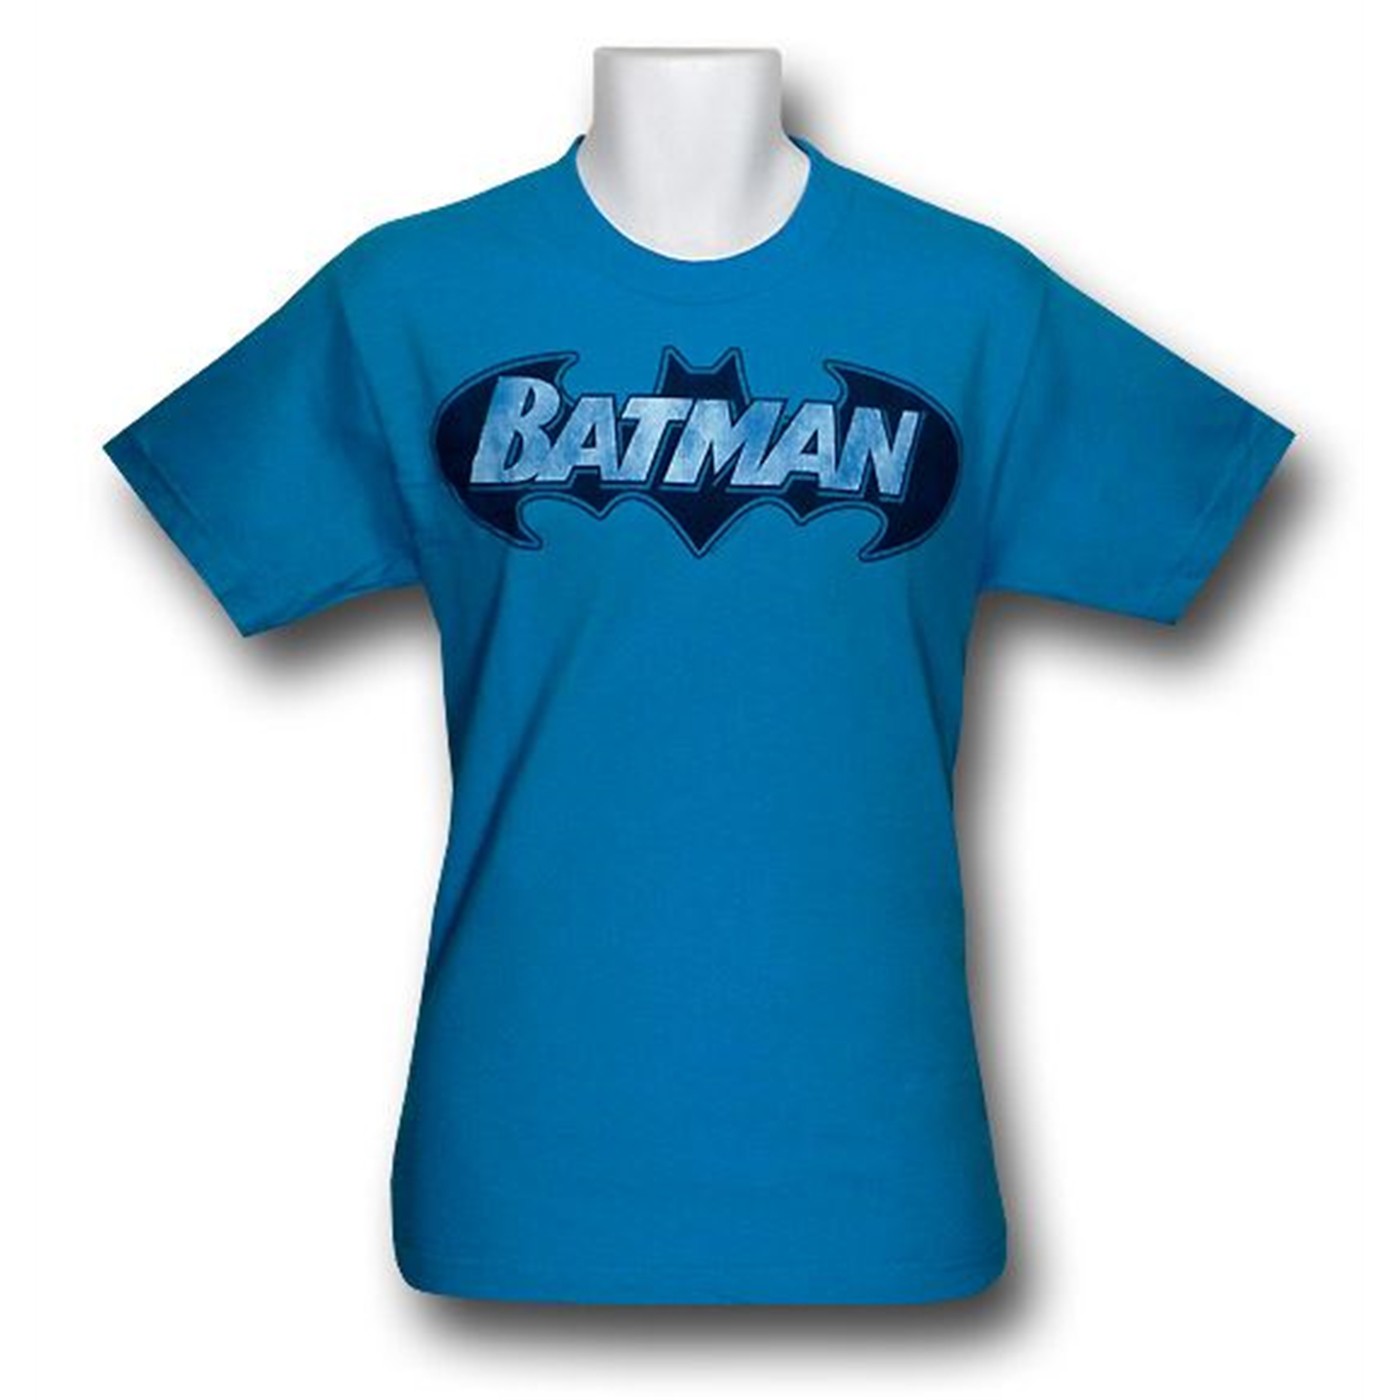 Batman Teal Distressed Logo T-Shirt